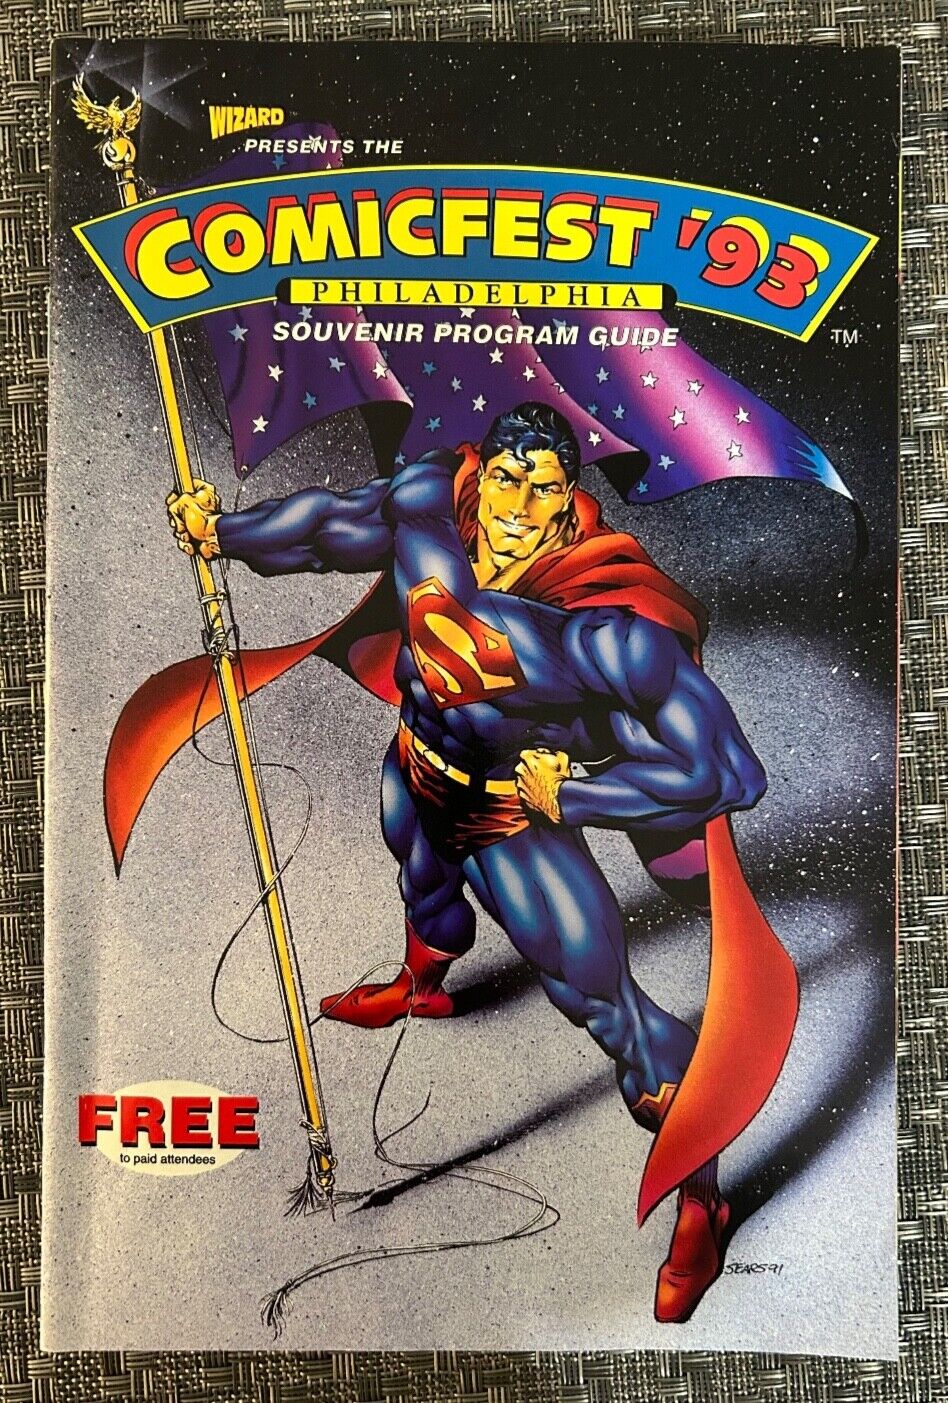 Comic Fest 1993 Philadelphia Program Guide Wizard Presents Superman Cover